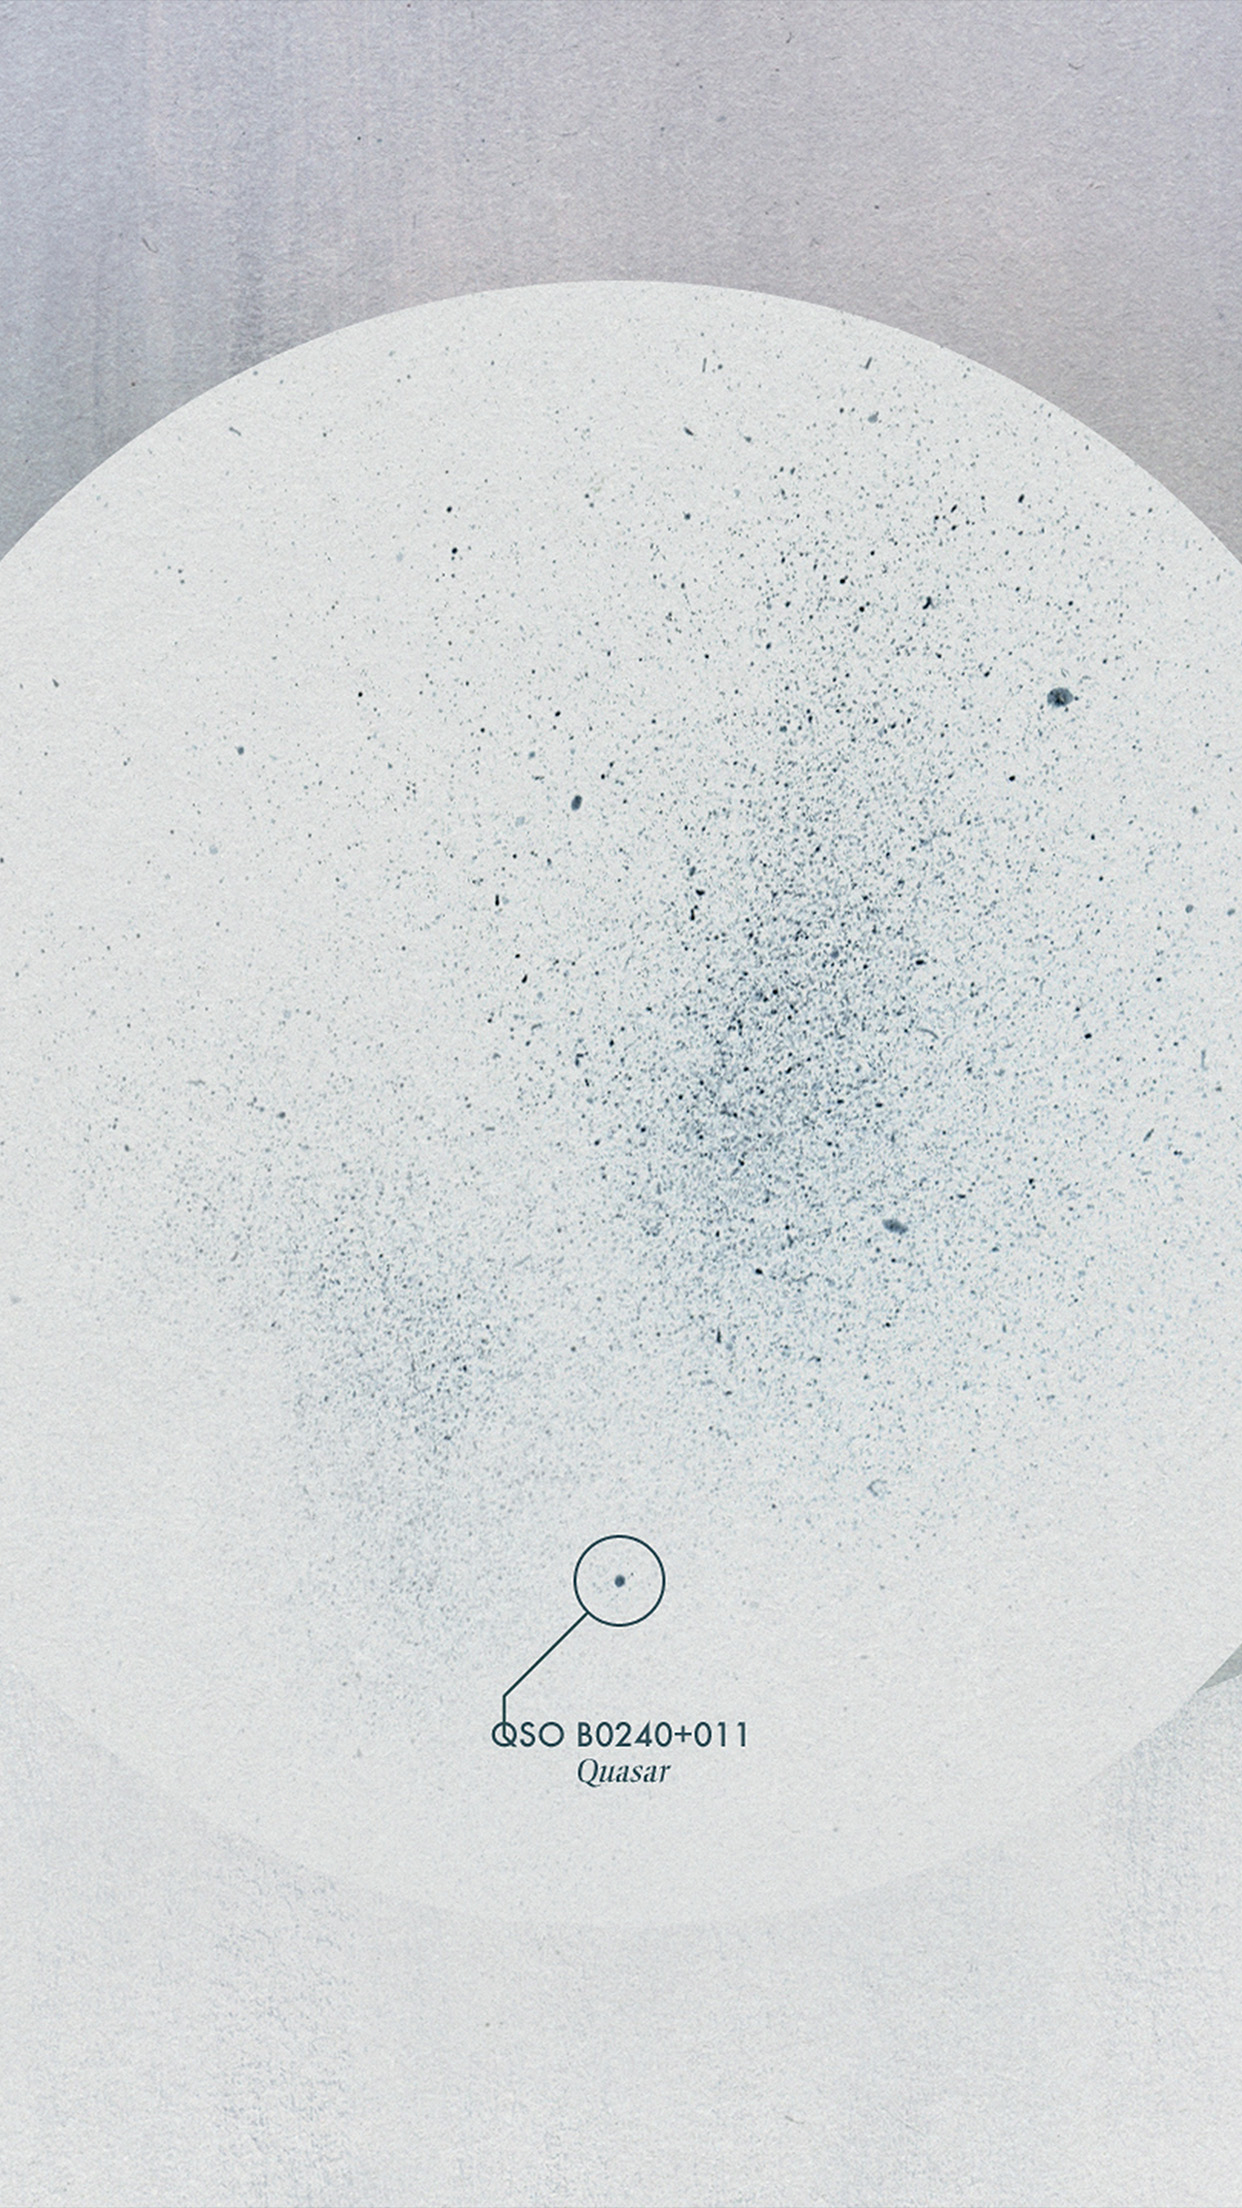 iPhone X wallpaper. simple minimal space circle art illustration white